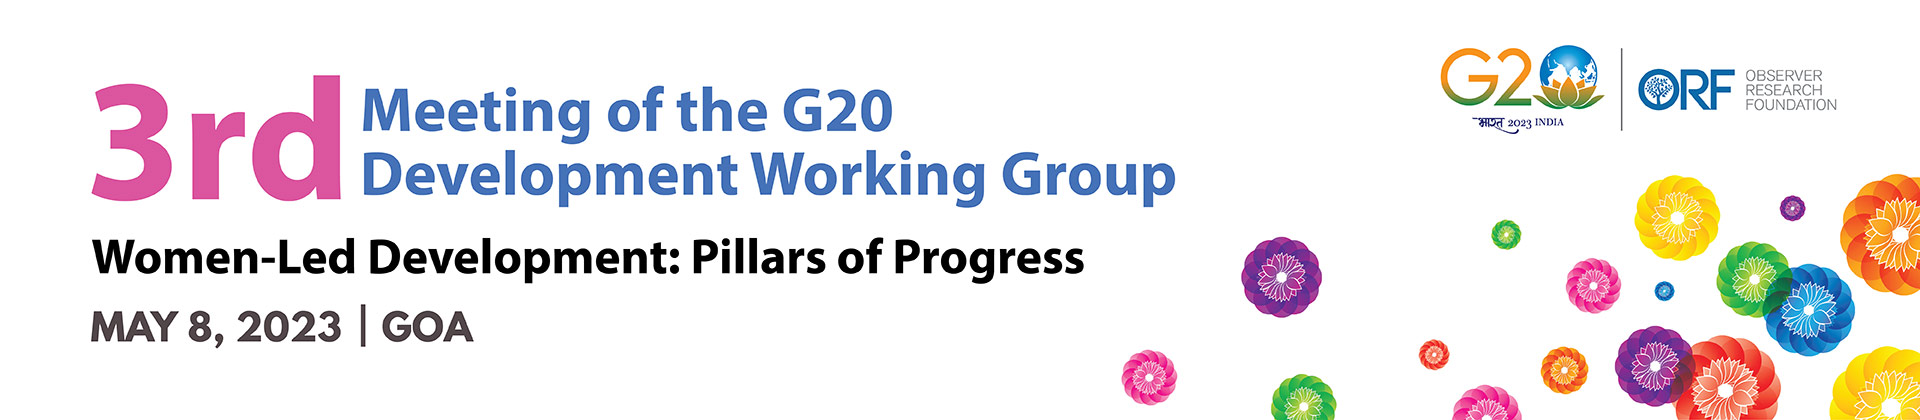 3rd Meeting of the G20 Development Working Group Women-Led Development: Pillars of Progress